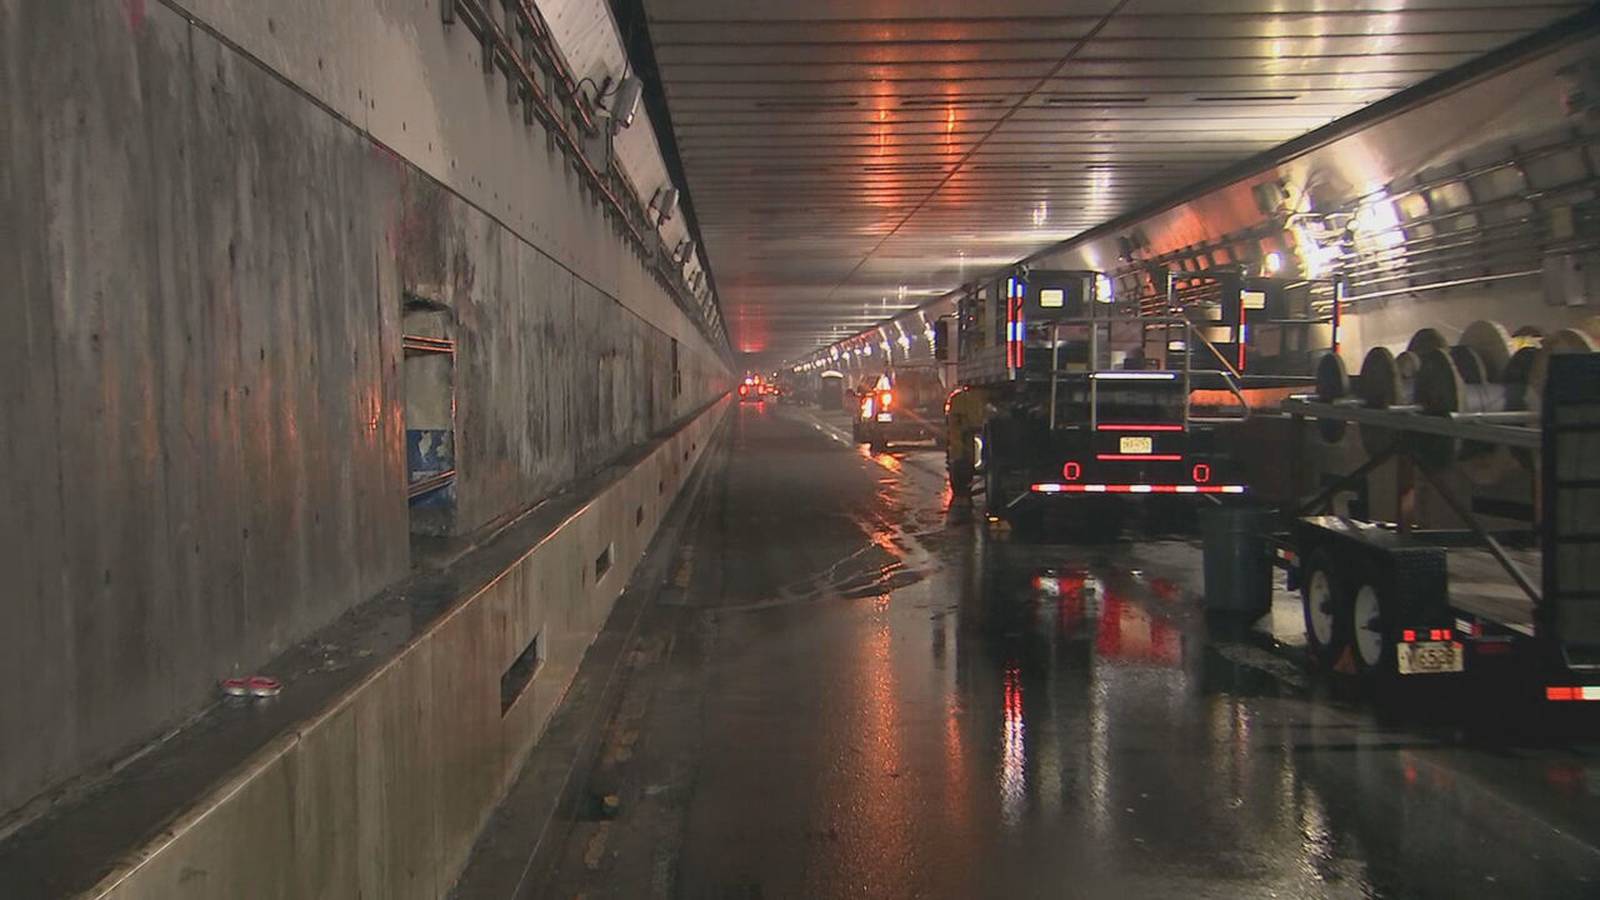 Behindthescenes look at construction inside Sumner Tunnel as 8week closure begins Boston 25